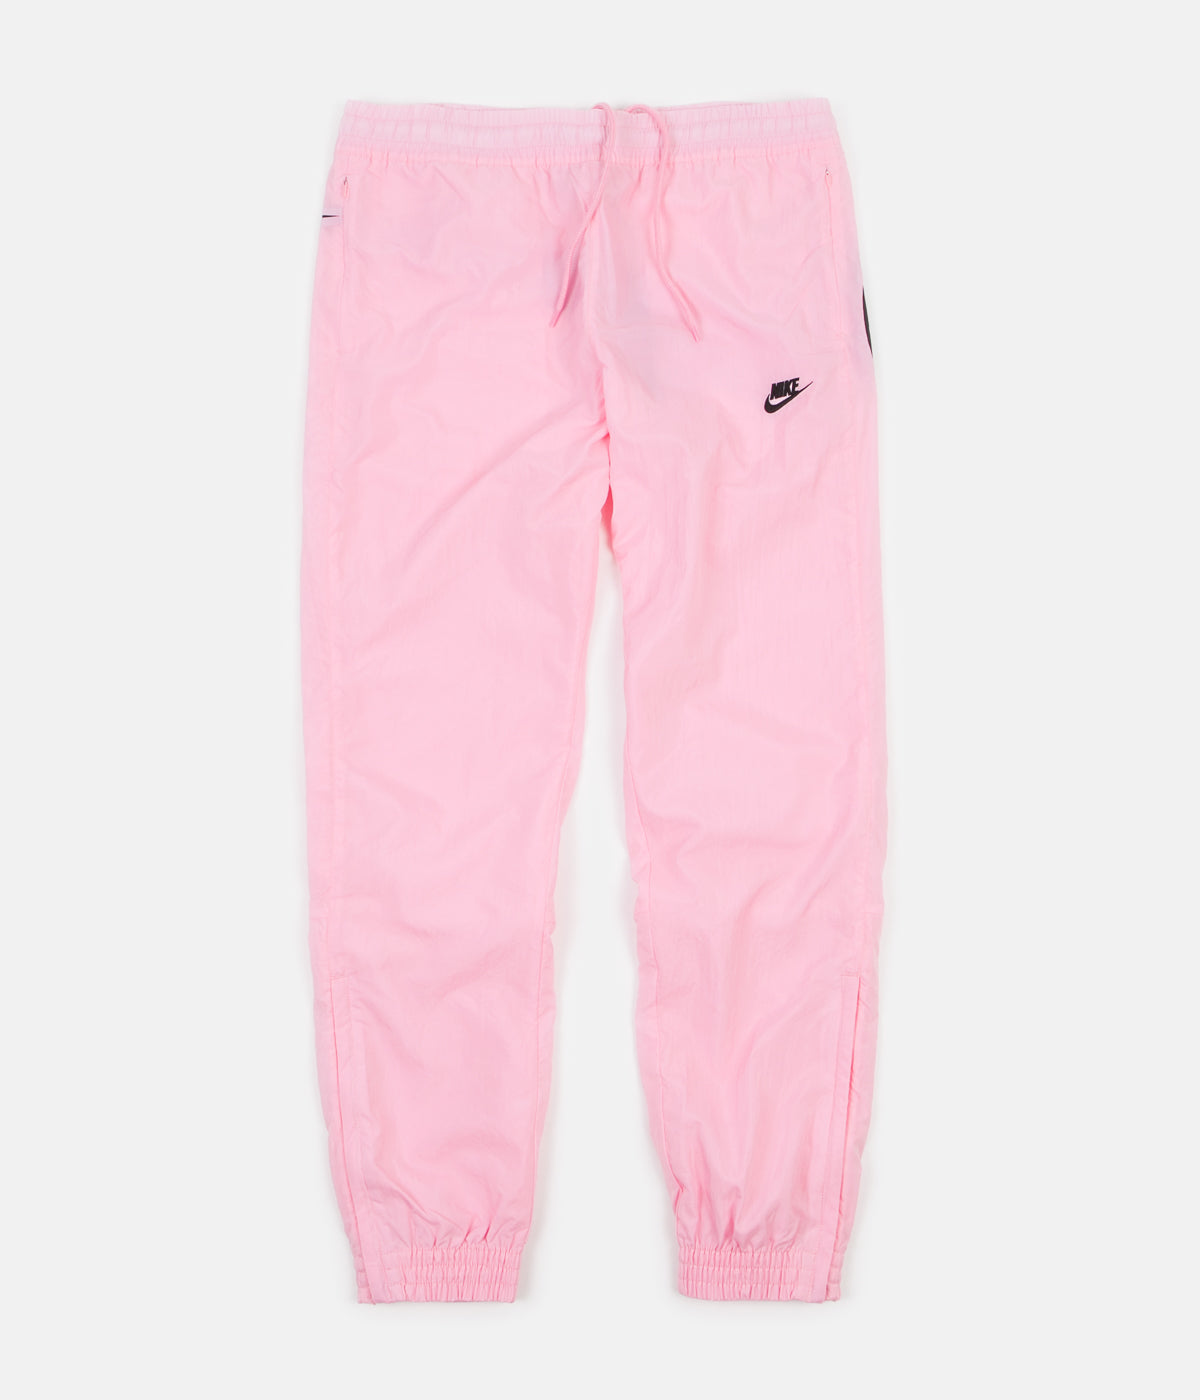 nike pink woven pants